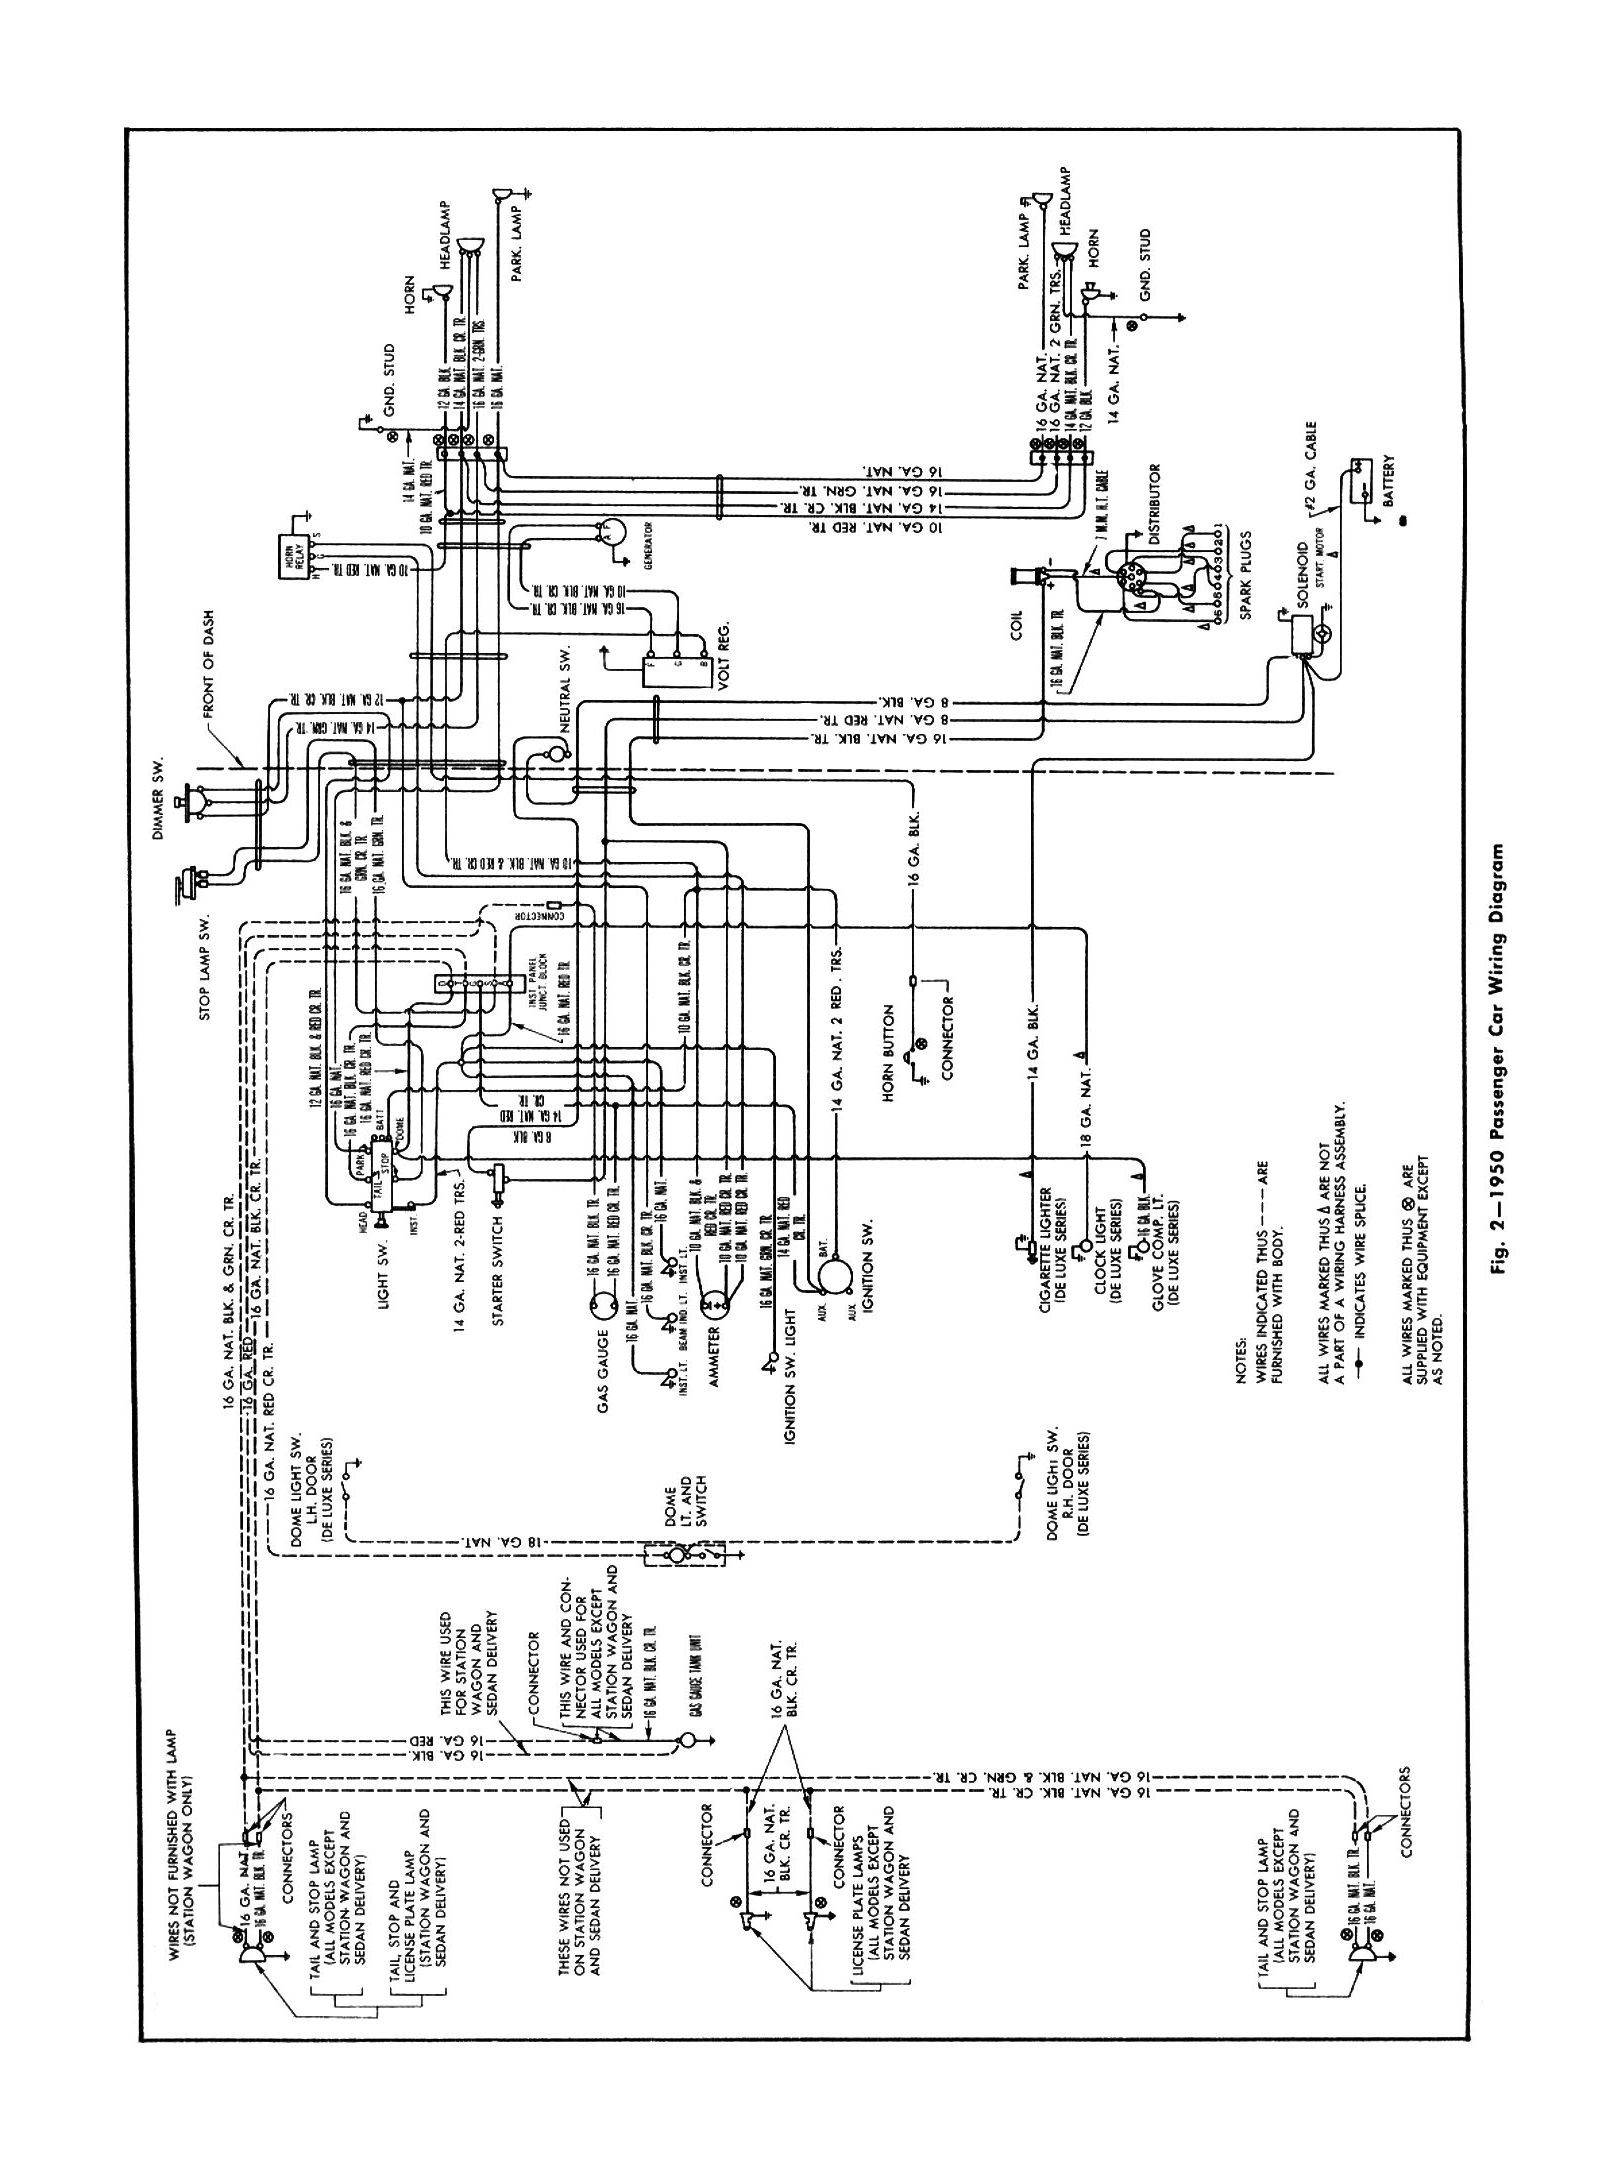 Chevy Wiring Diagrams, Chevrolet Truck Wiring Diagrams Free Pdf